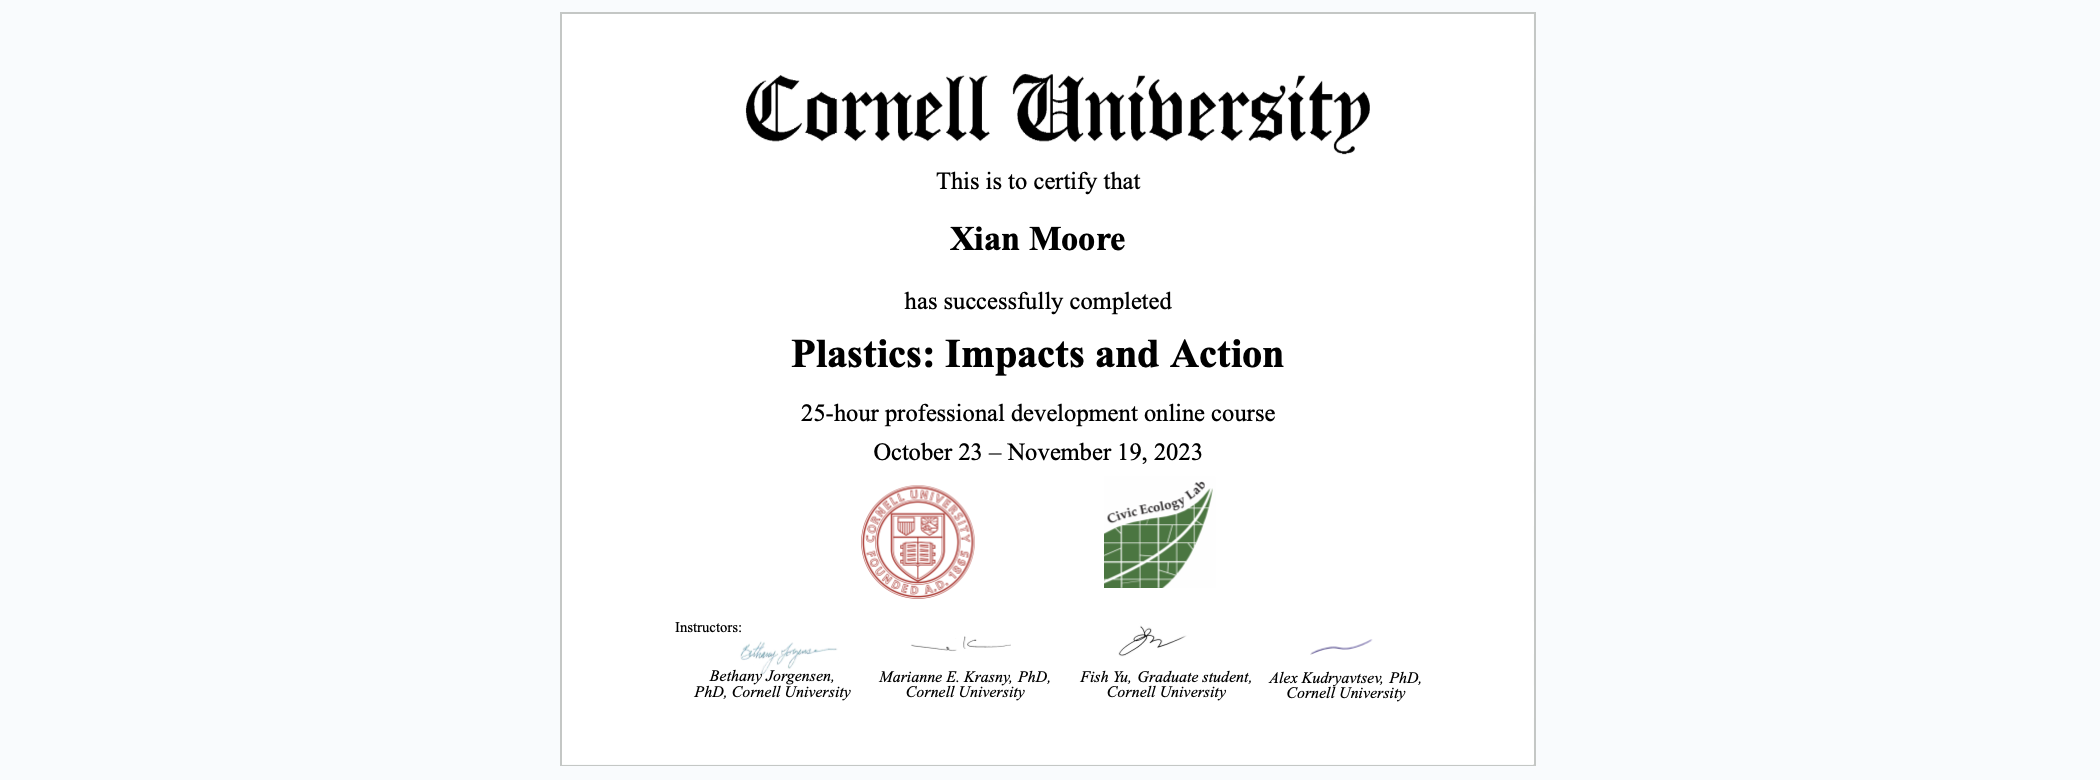 Cornell University Civic Ecology Lab Certificate